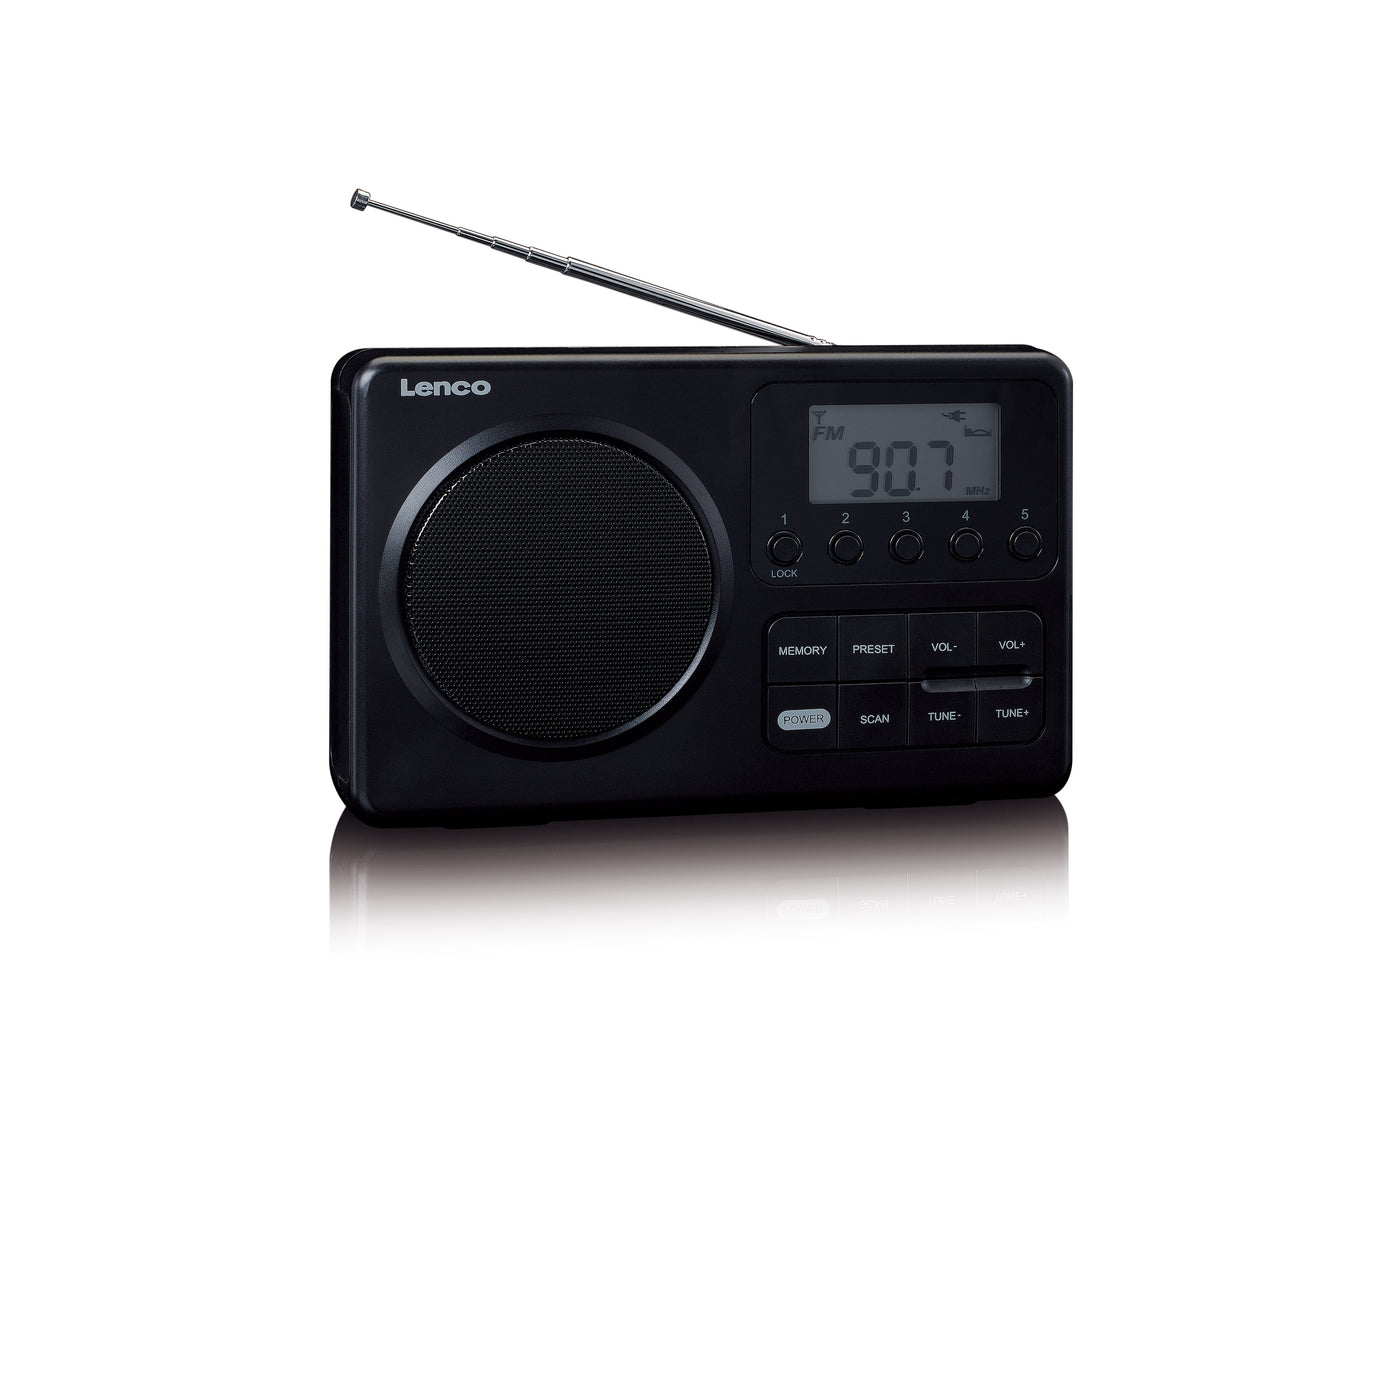 Lenco MPR-035BK - Compact portable FM radio with LCD display - Black